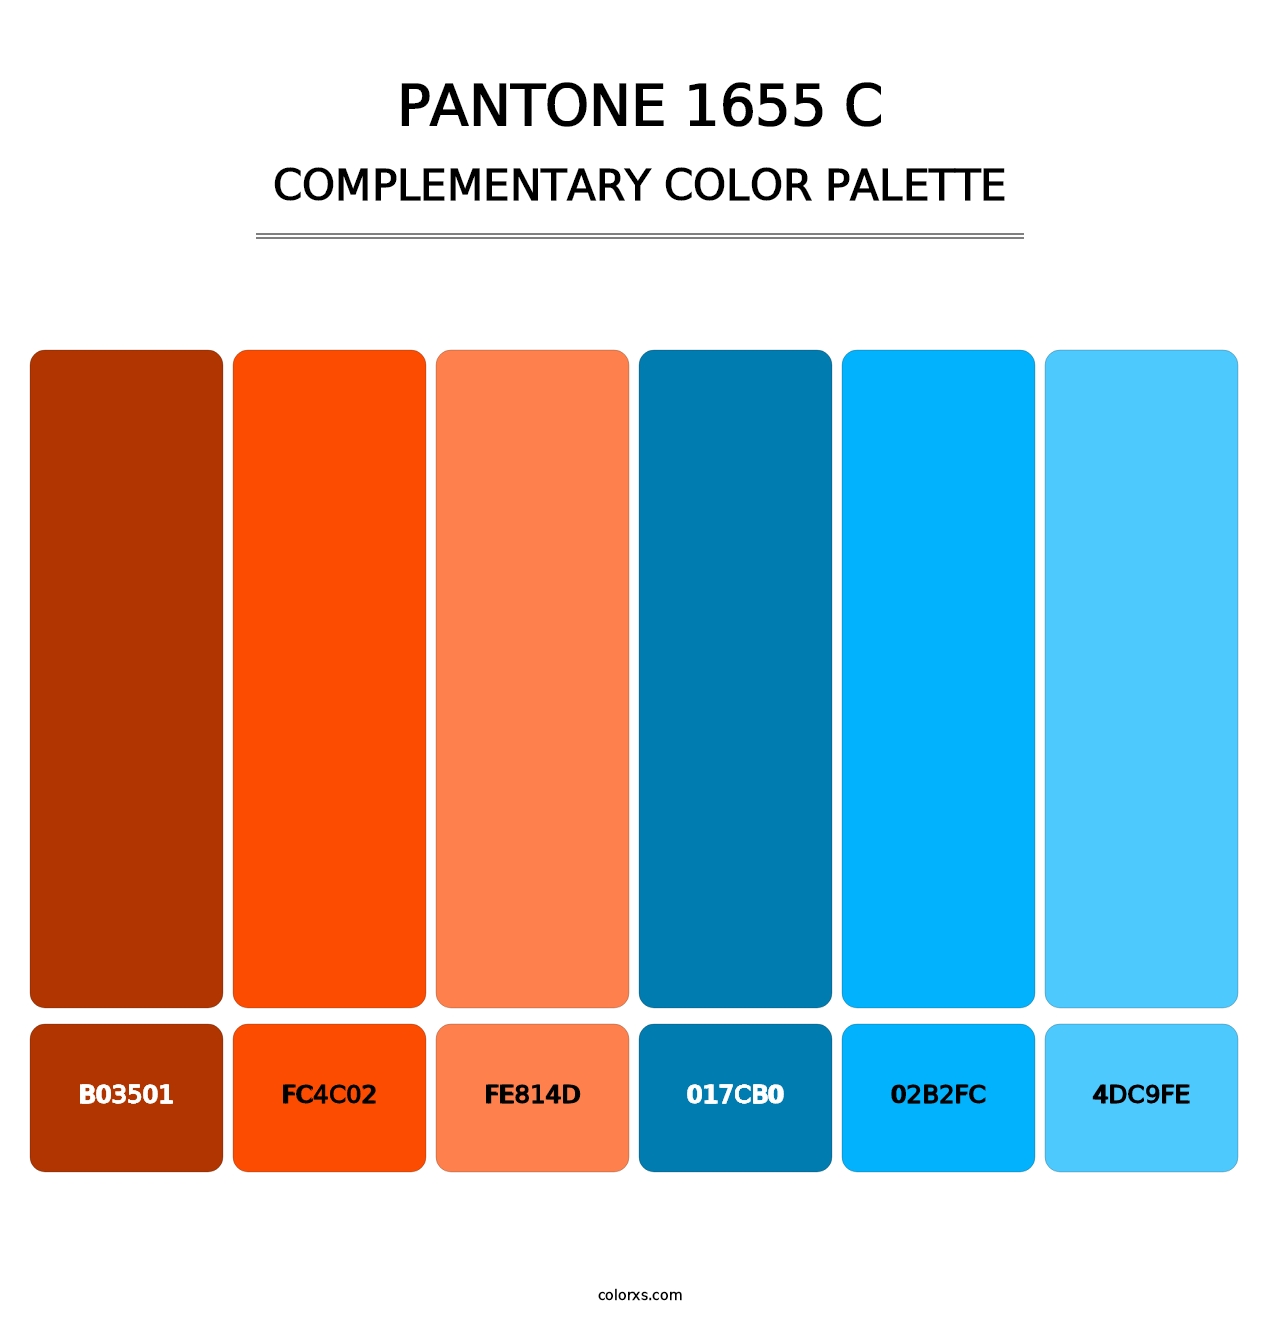 PANTONE 1655 C - Complementary Color Palette